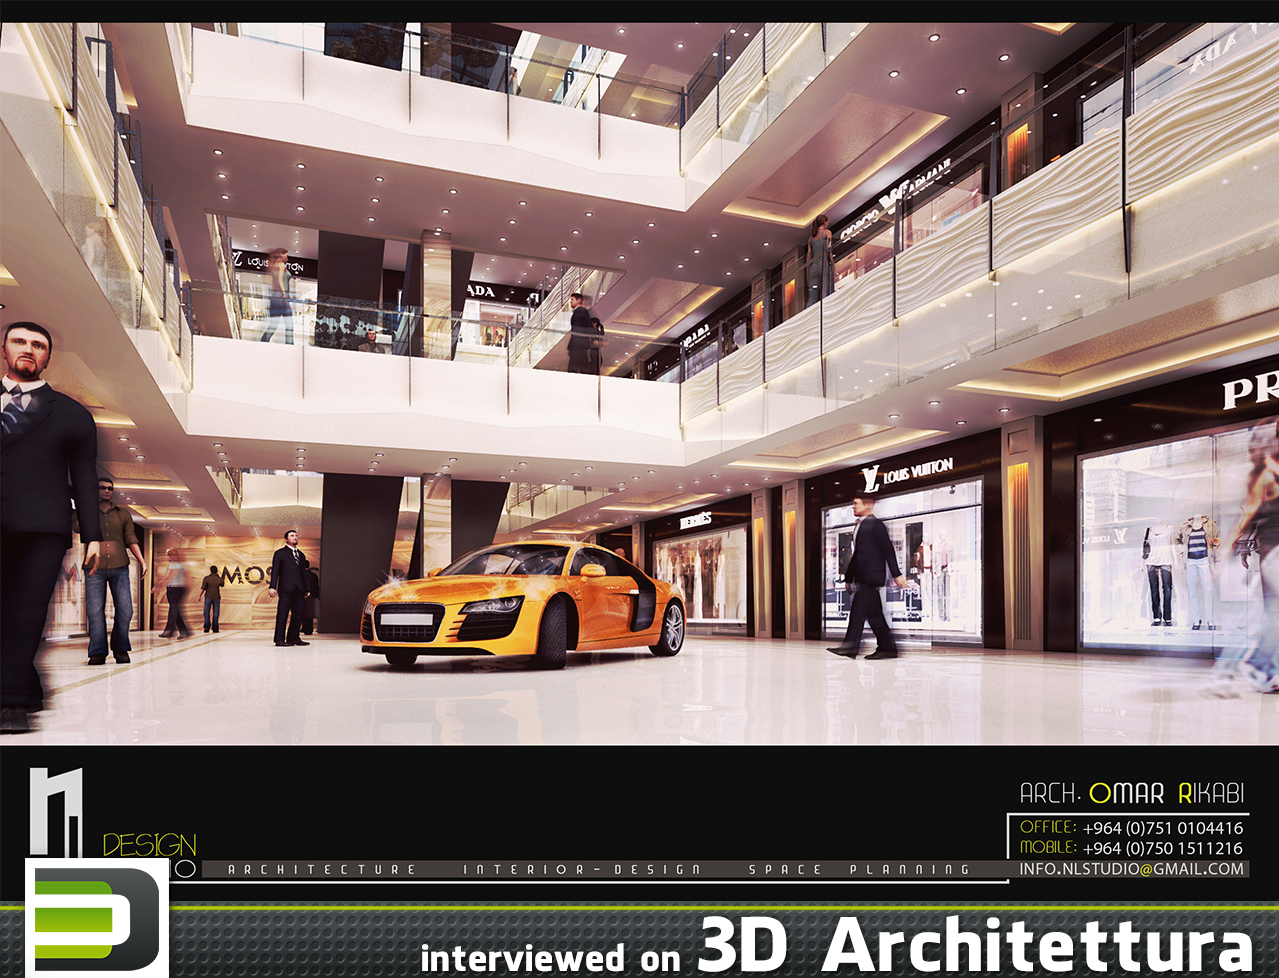 Omar Rikabi interviewed on 3D Architettura: architecture, design, render, 3d, CG. www.3darchitettura.com